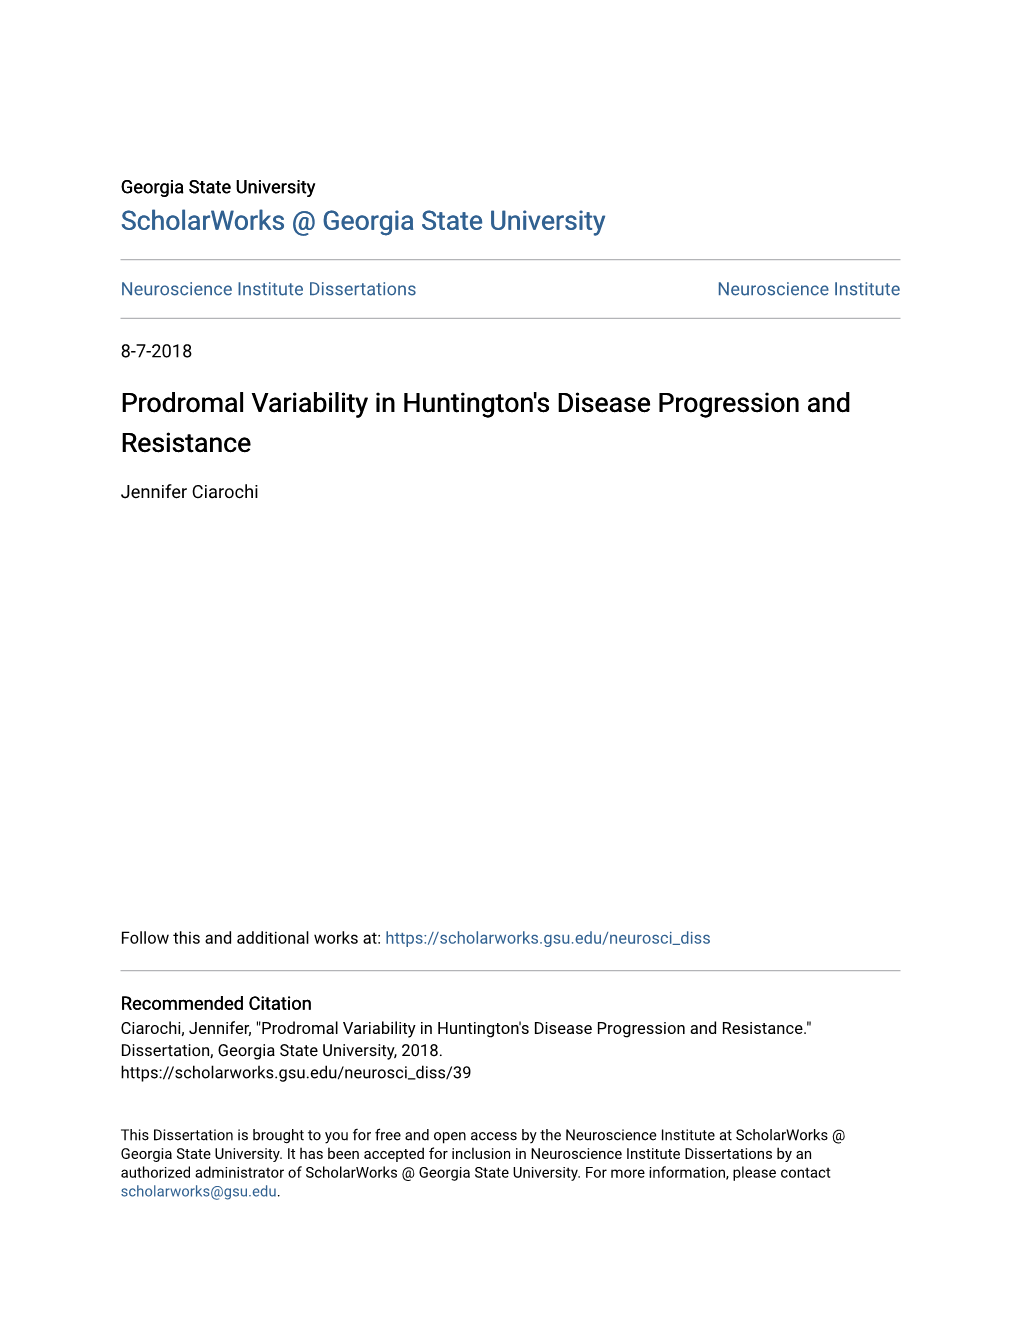 Prodromal Variability in Huntington's Disease Progression and Resistance